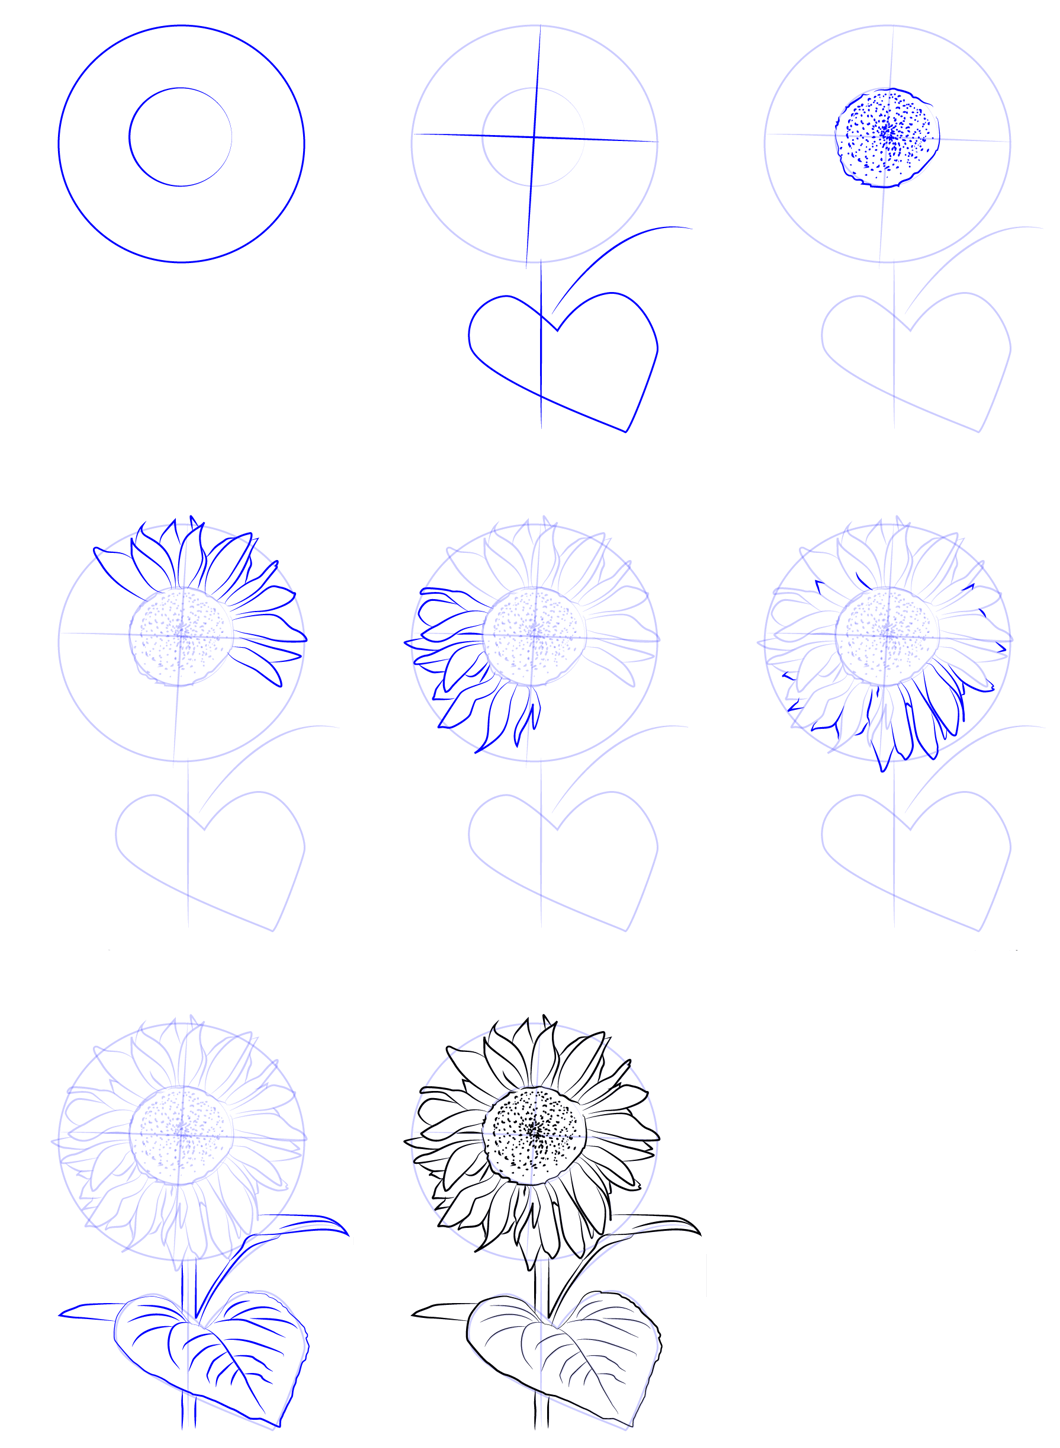 Basit ayçiçeği çizimi (2) çizimi